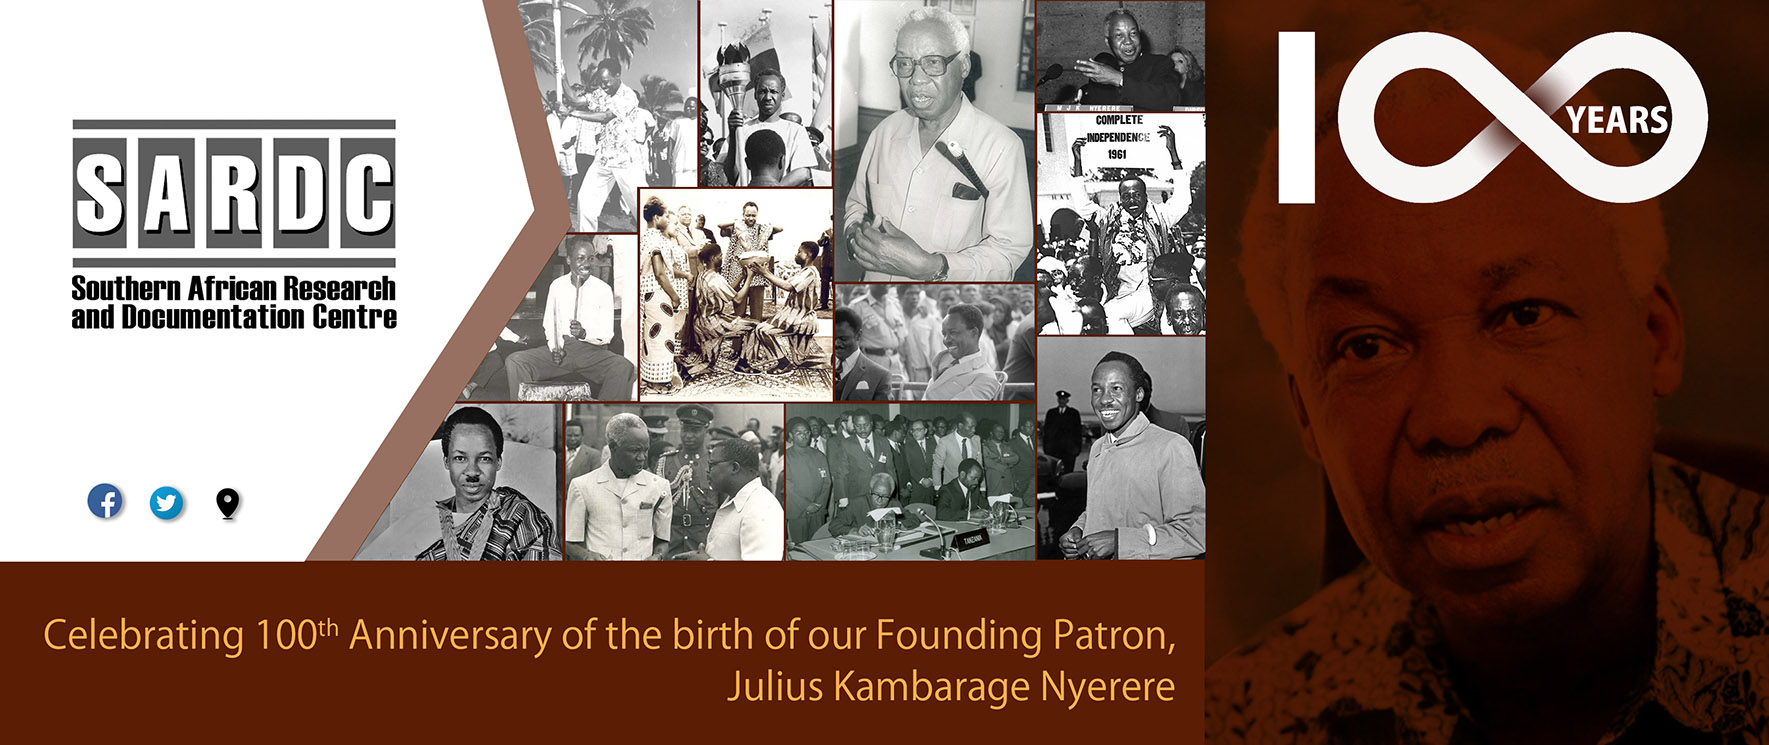 Please Click to visit Mwalimu J.K Nyerere's portal